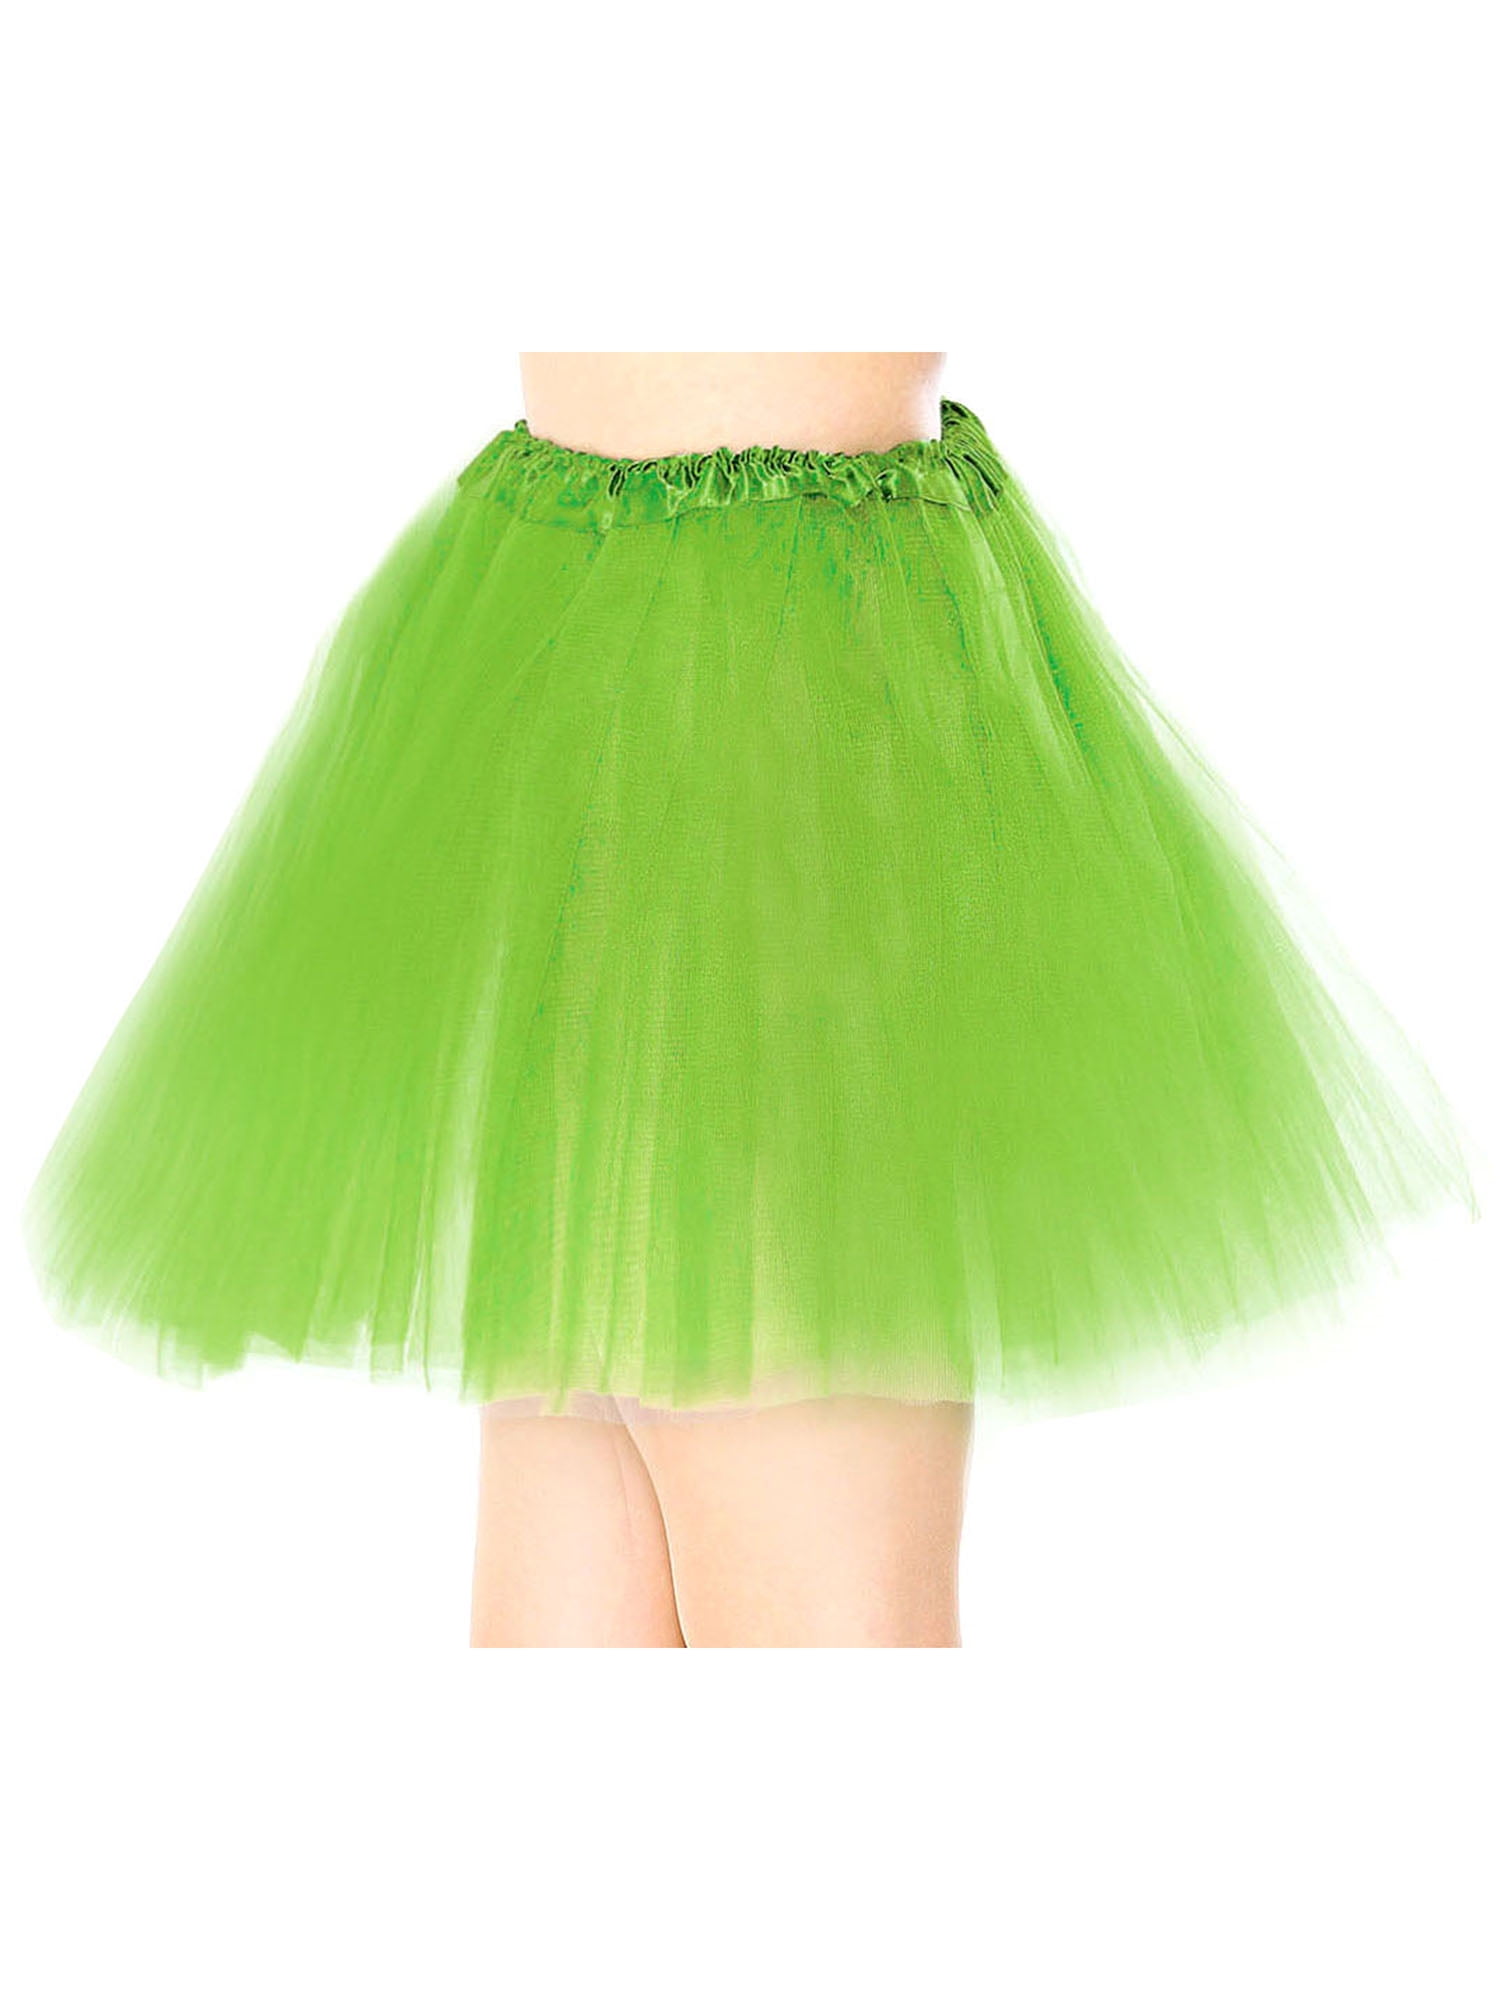 Rimi Hanger Girls 3 Layers TUTU Skirts Childrens 80s Fancy Dress Accessory Skirt 